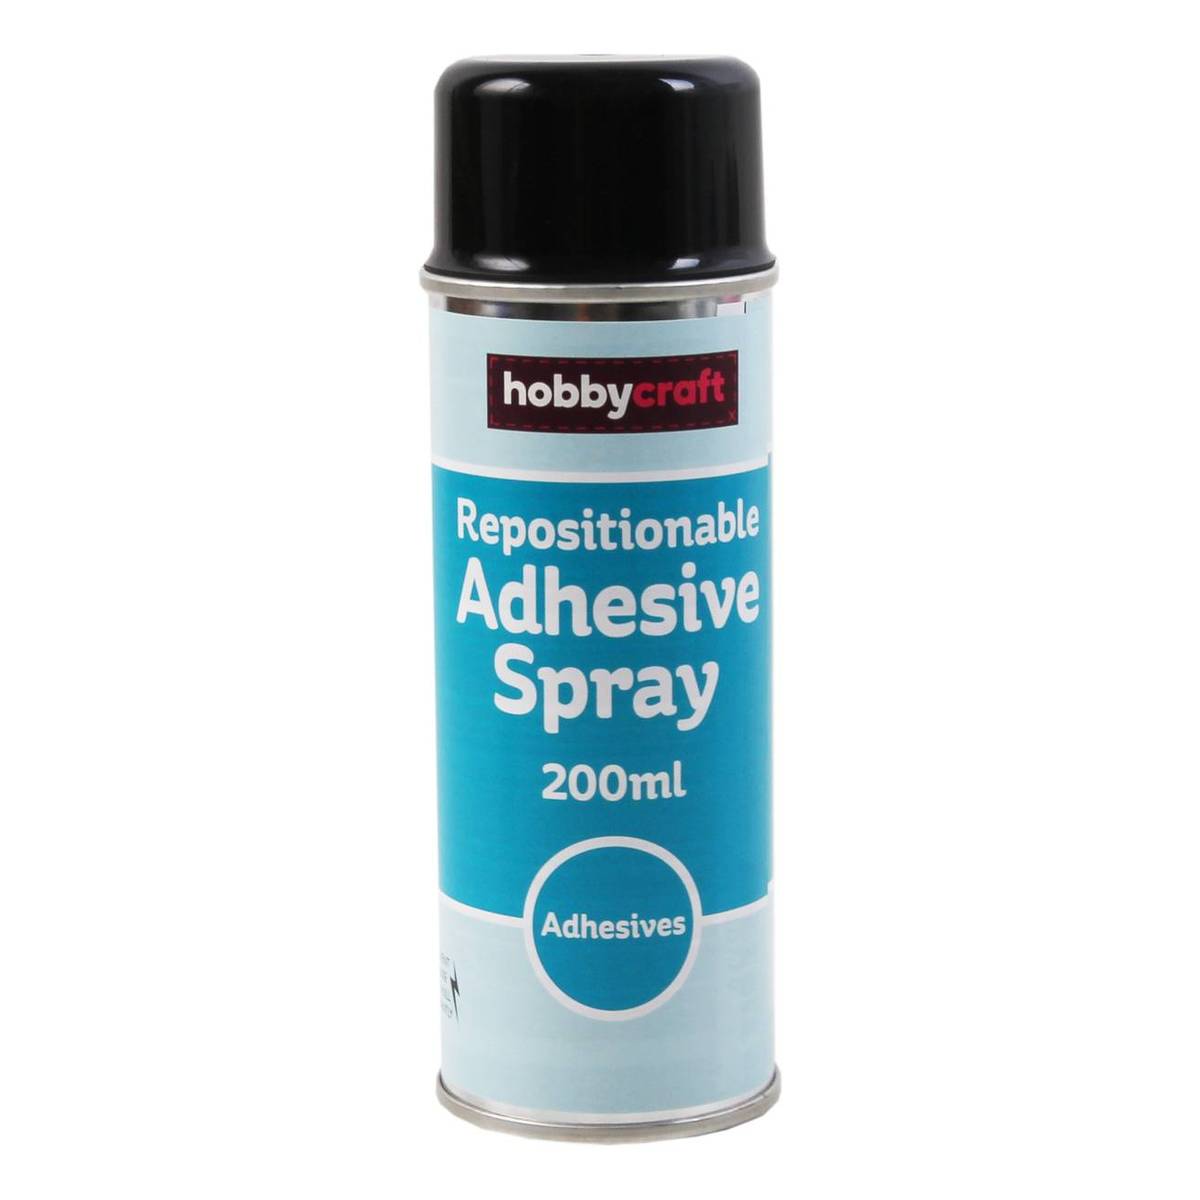 Repositionable Adhesive Spray 200ml